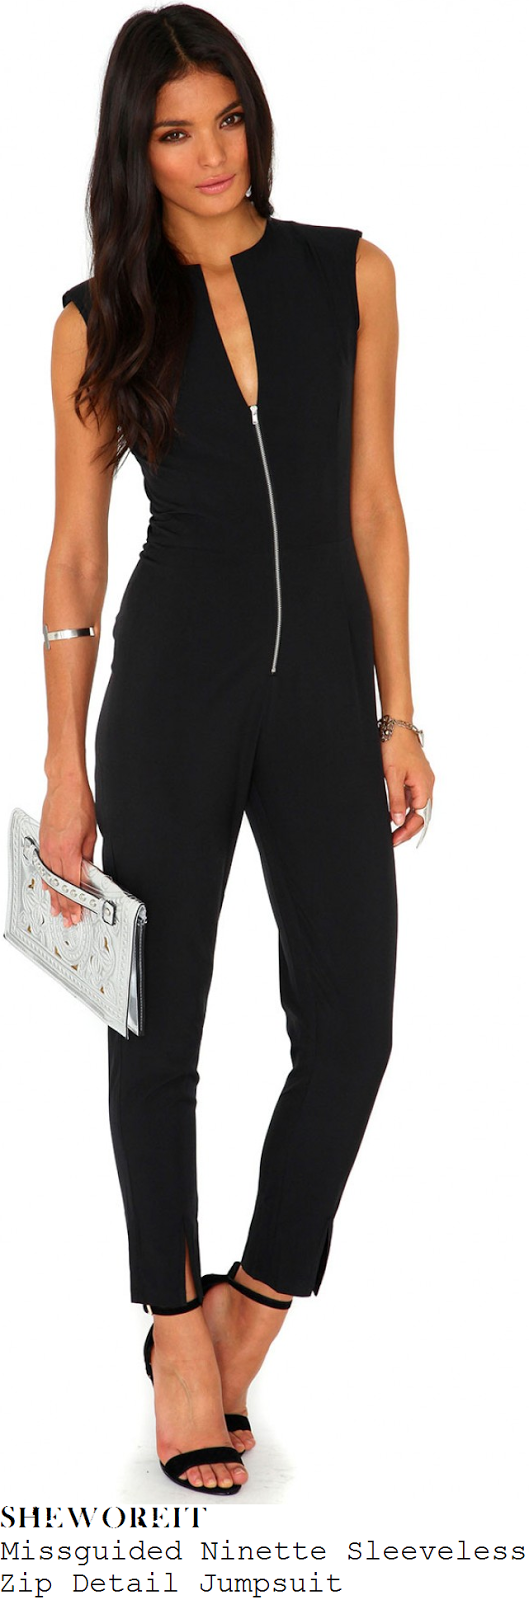 jessica-wright-black-sleeveless-zip-detail-front-jumpsuit